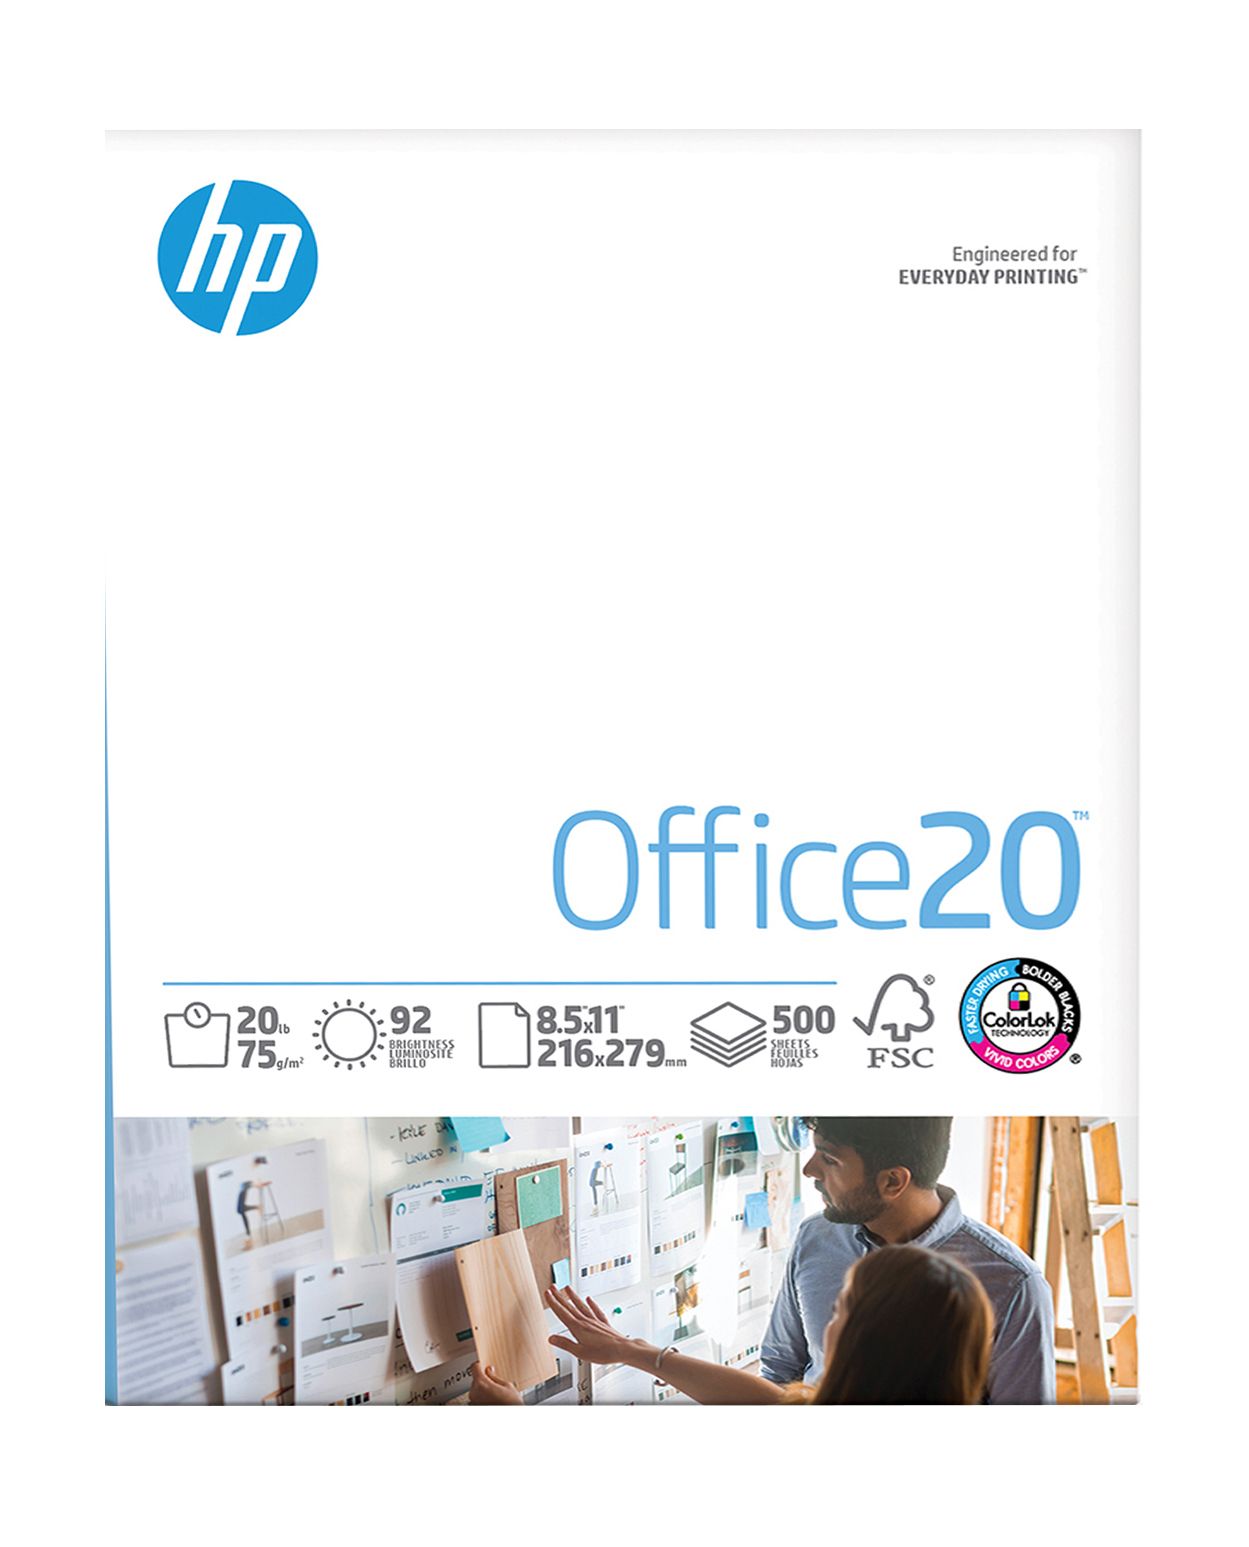 HP White Office Copy Paper, 92 Brightness, 20 lbs. - BJs Wholesale Club